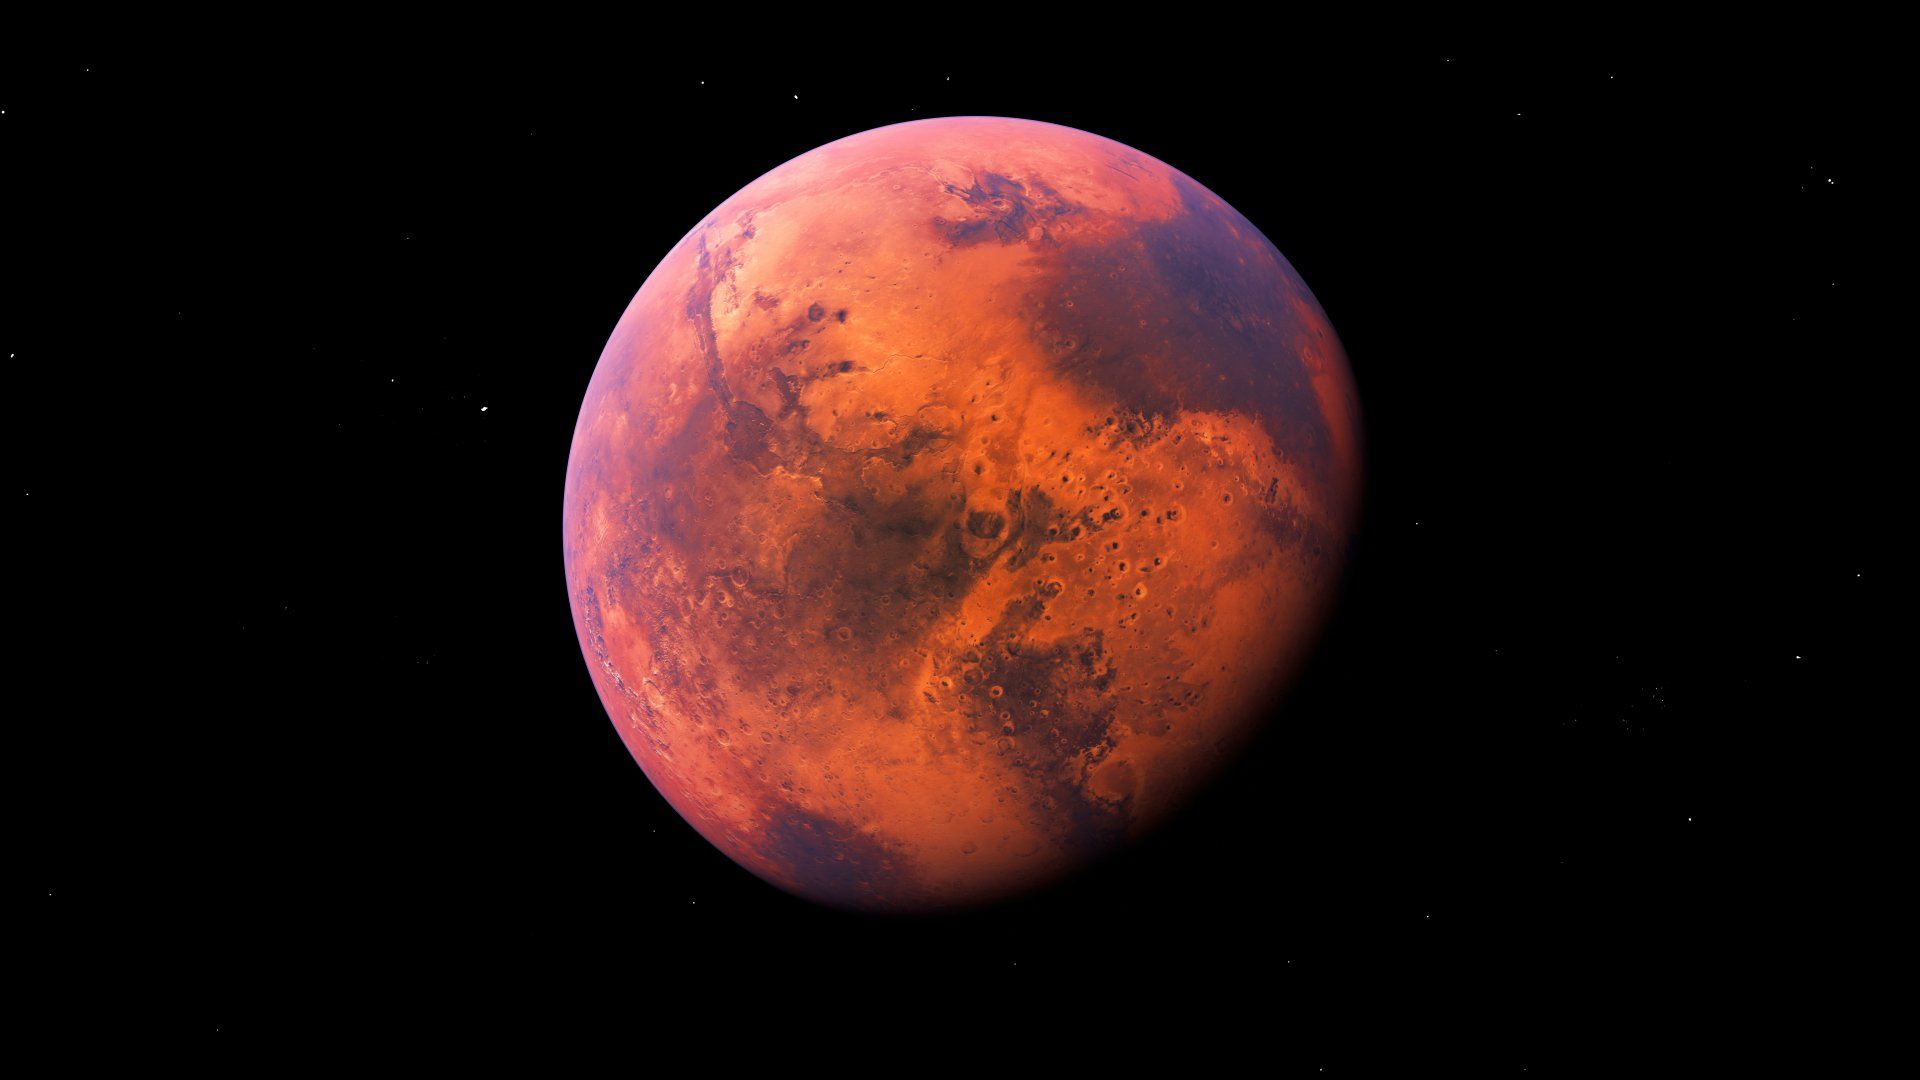 Photograph of mars